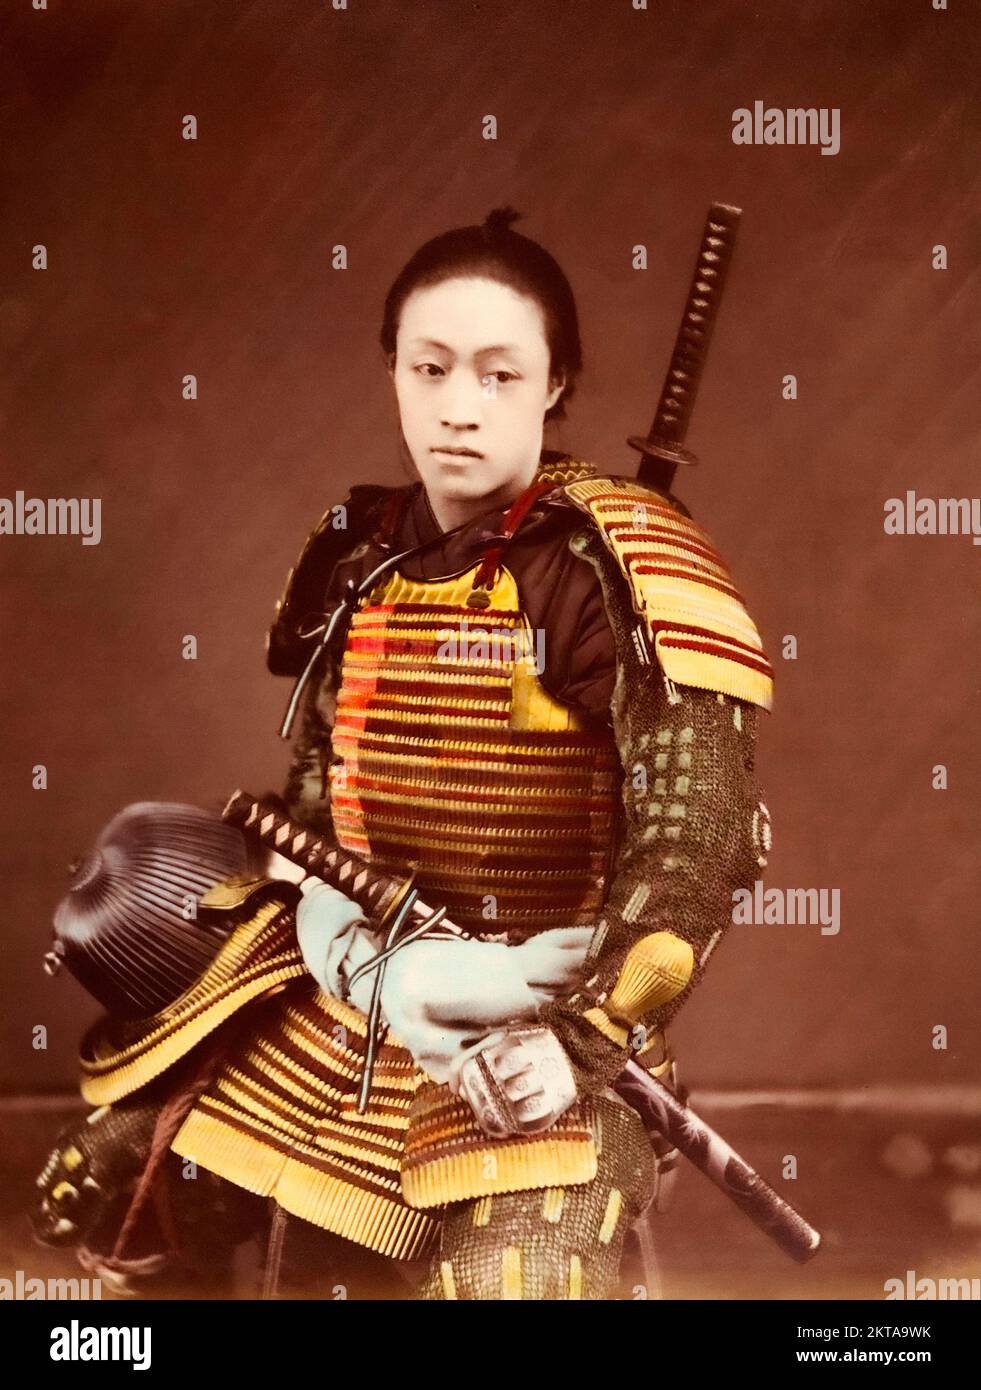 Actor in Samurai Armor 1870s  by Suzuki Shin'ichi Stock Photo